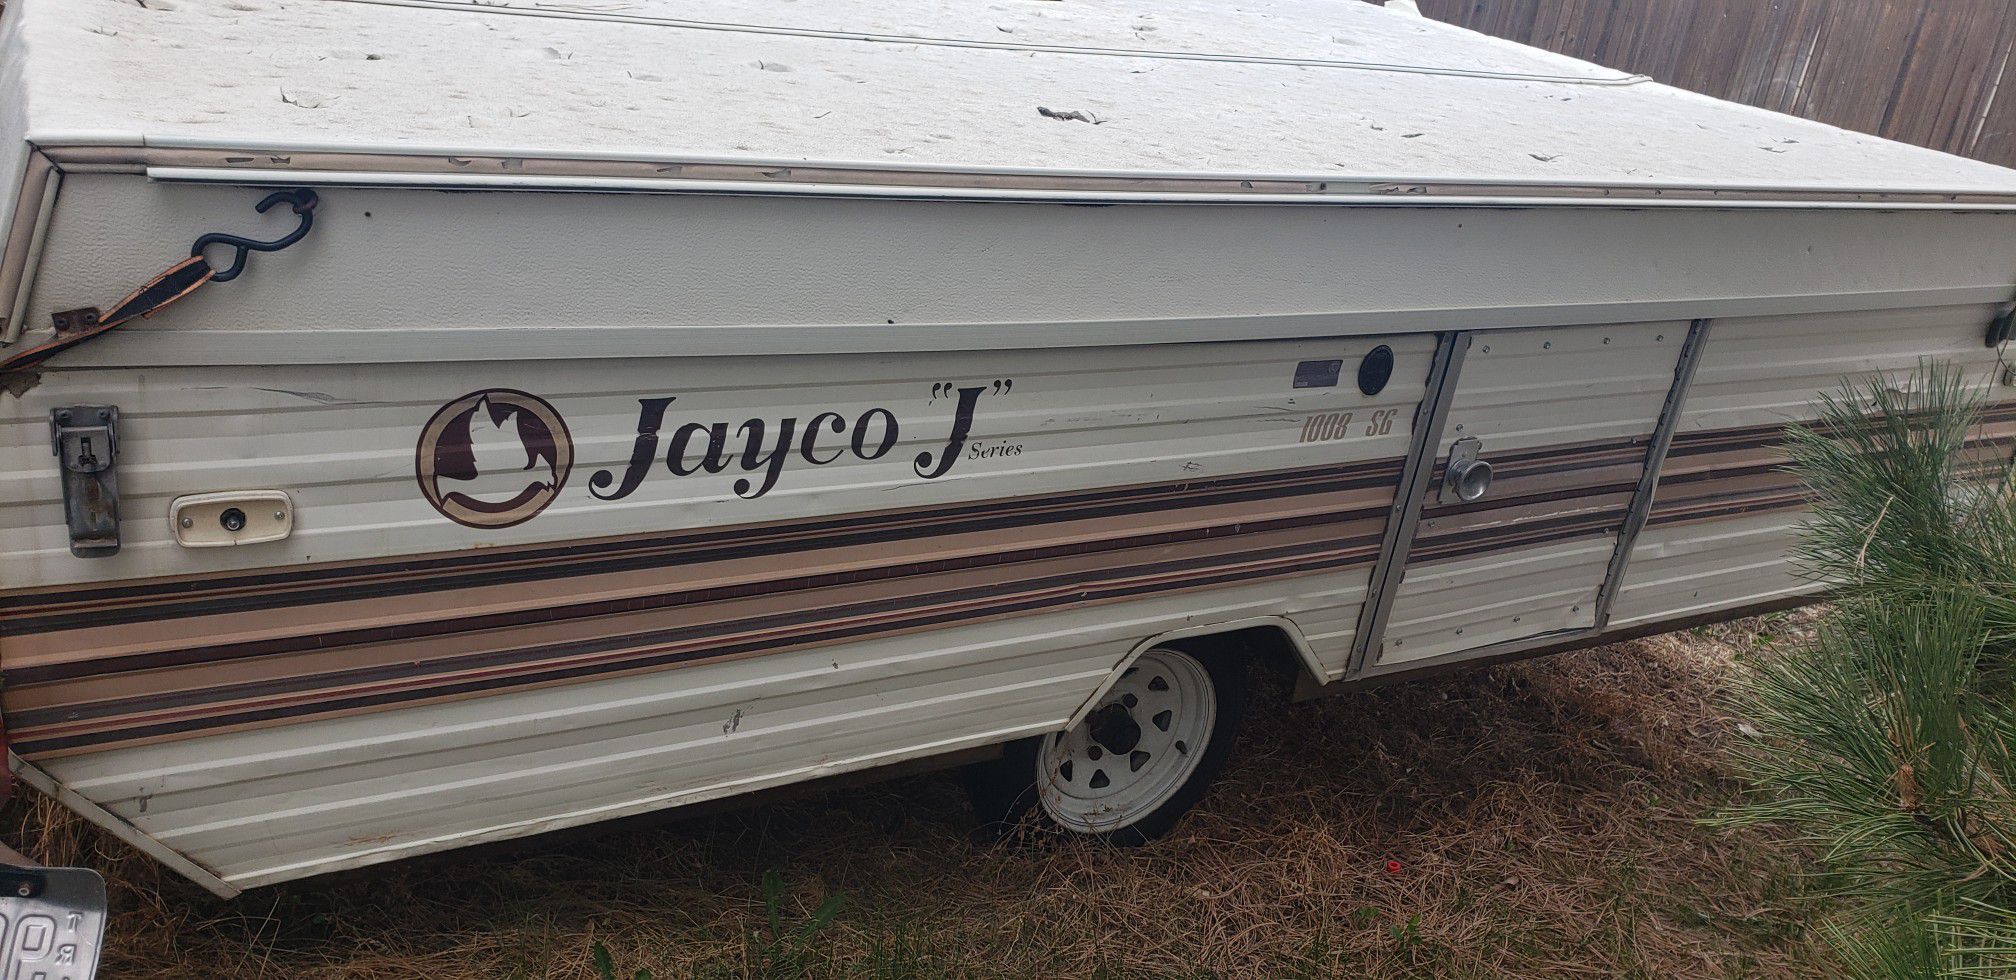 Jayco trailer